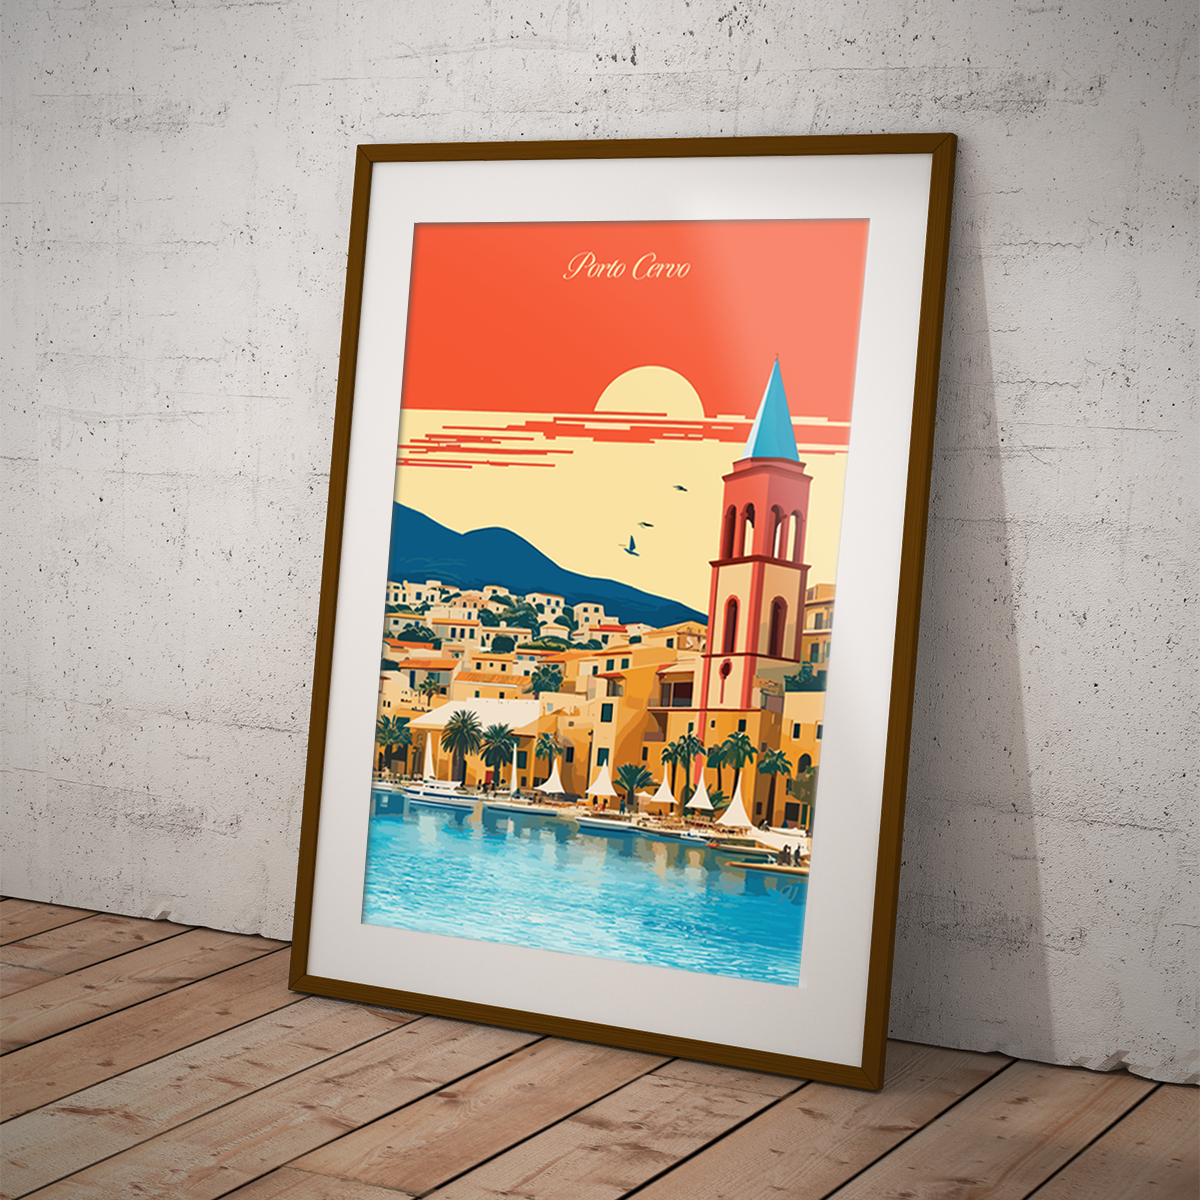 Porto Cervo poster by bon voyage design